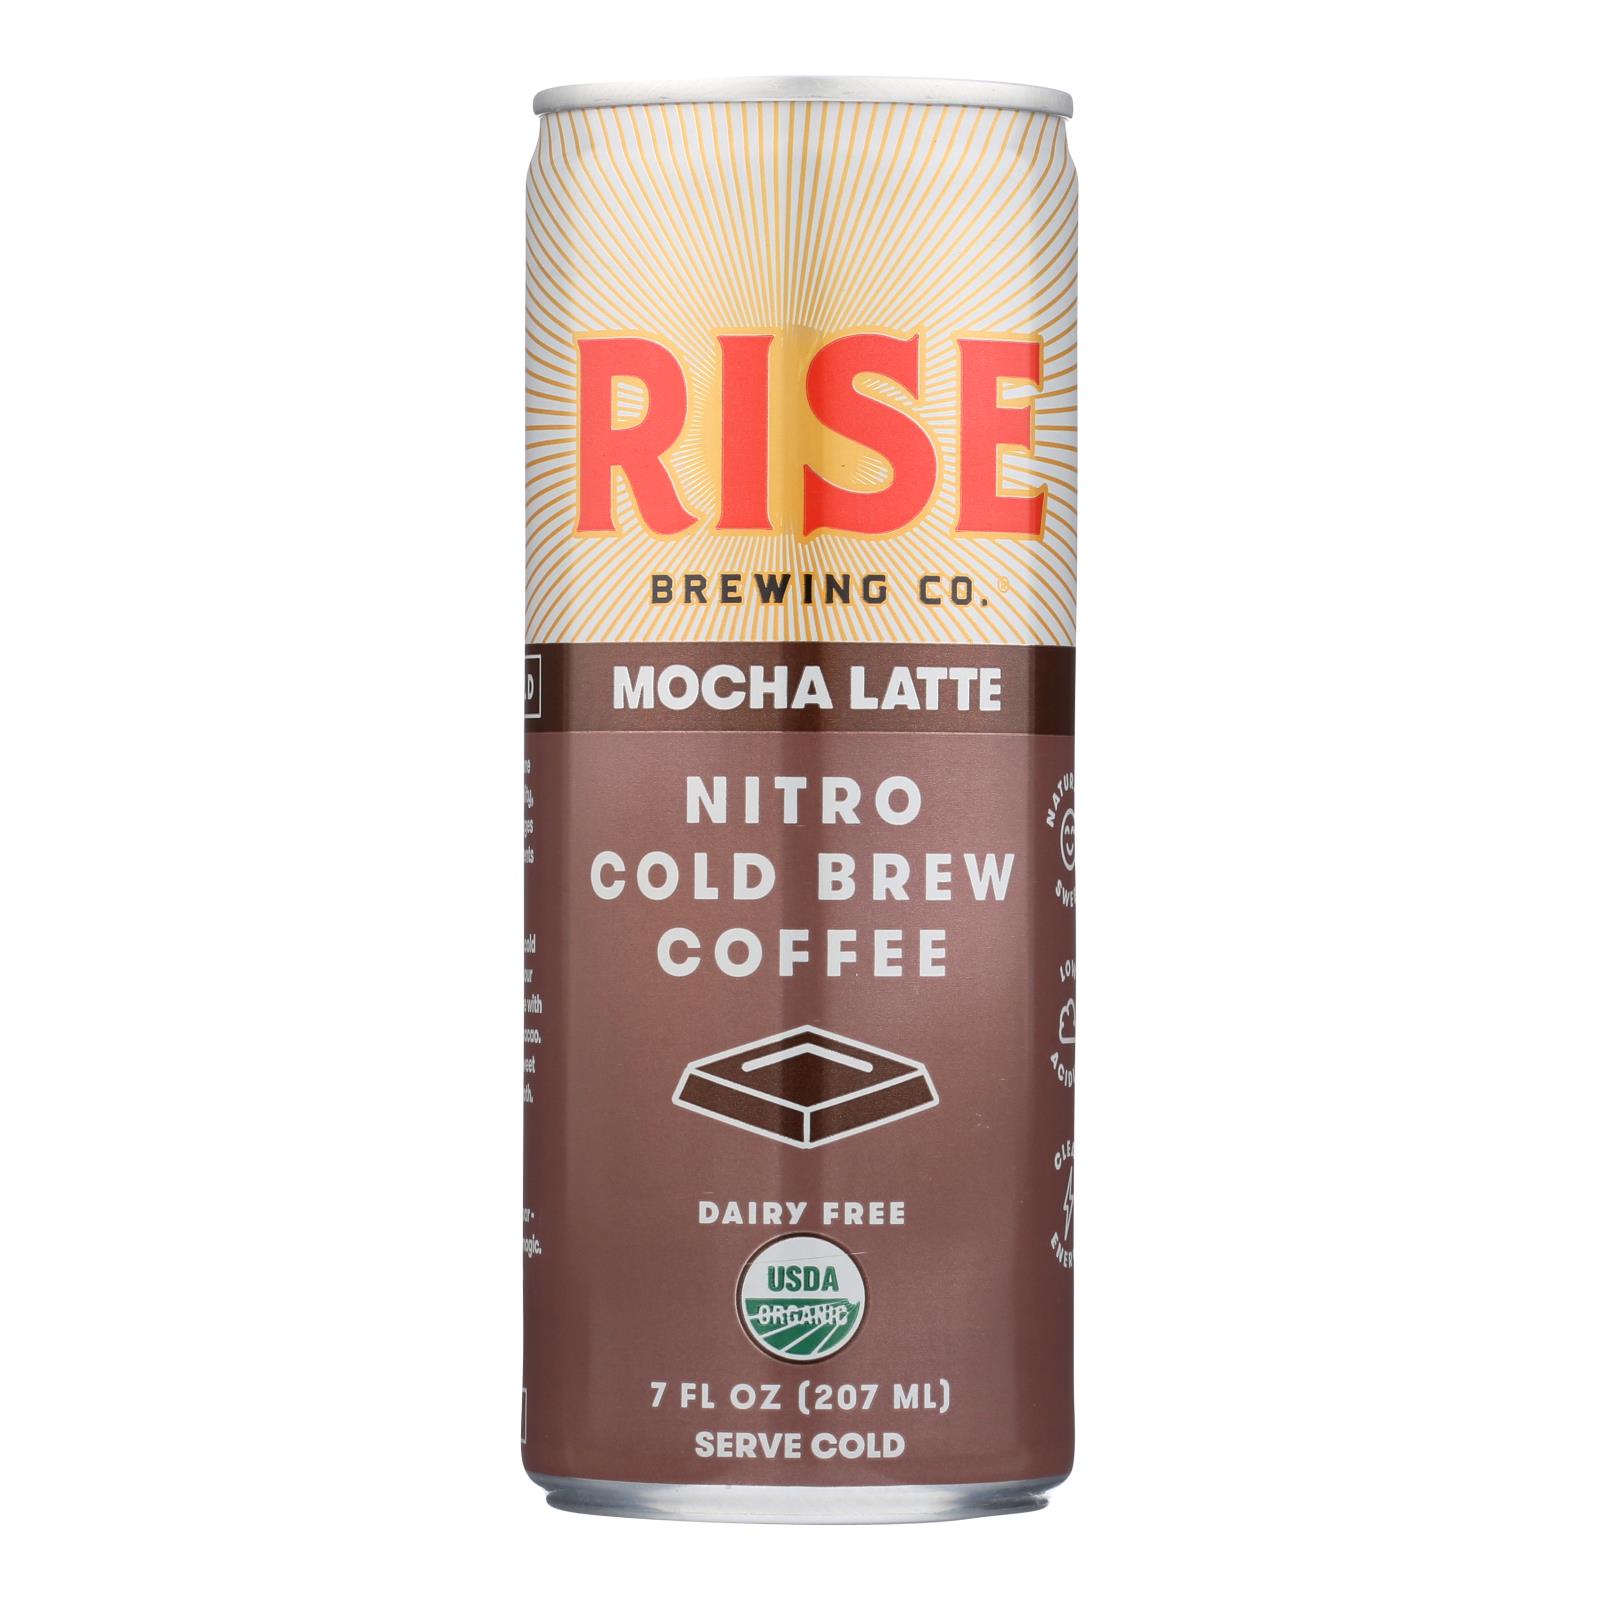 Rise Brewing Co. Mocha Latte Nitro Cold Brew Coffee, Mocha Latte - 12개 묶음상품 - 7 FZ